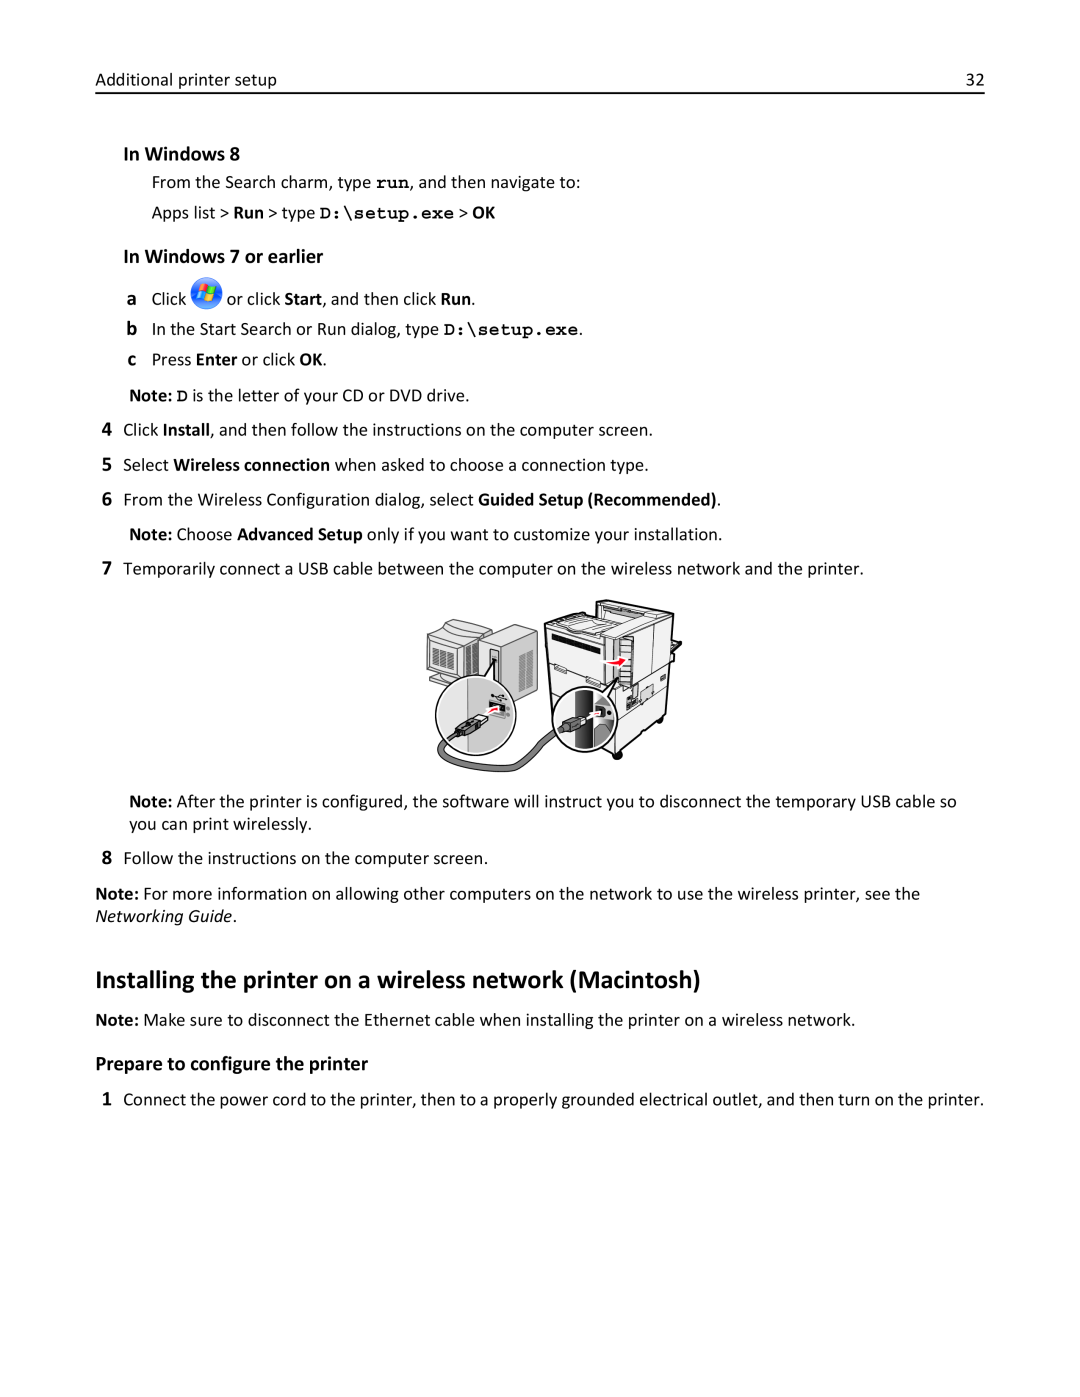 Lexmark 19Z0301, 110 Installing the printer on a wireless network Macintosh, Prepare to configure the printer, In Windows 